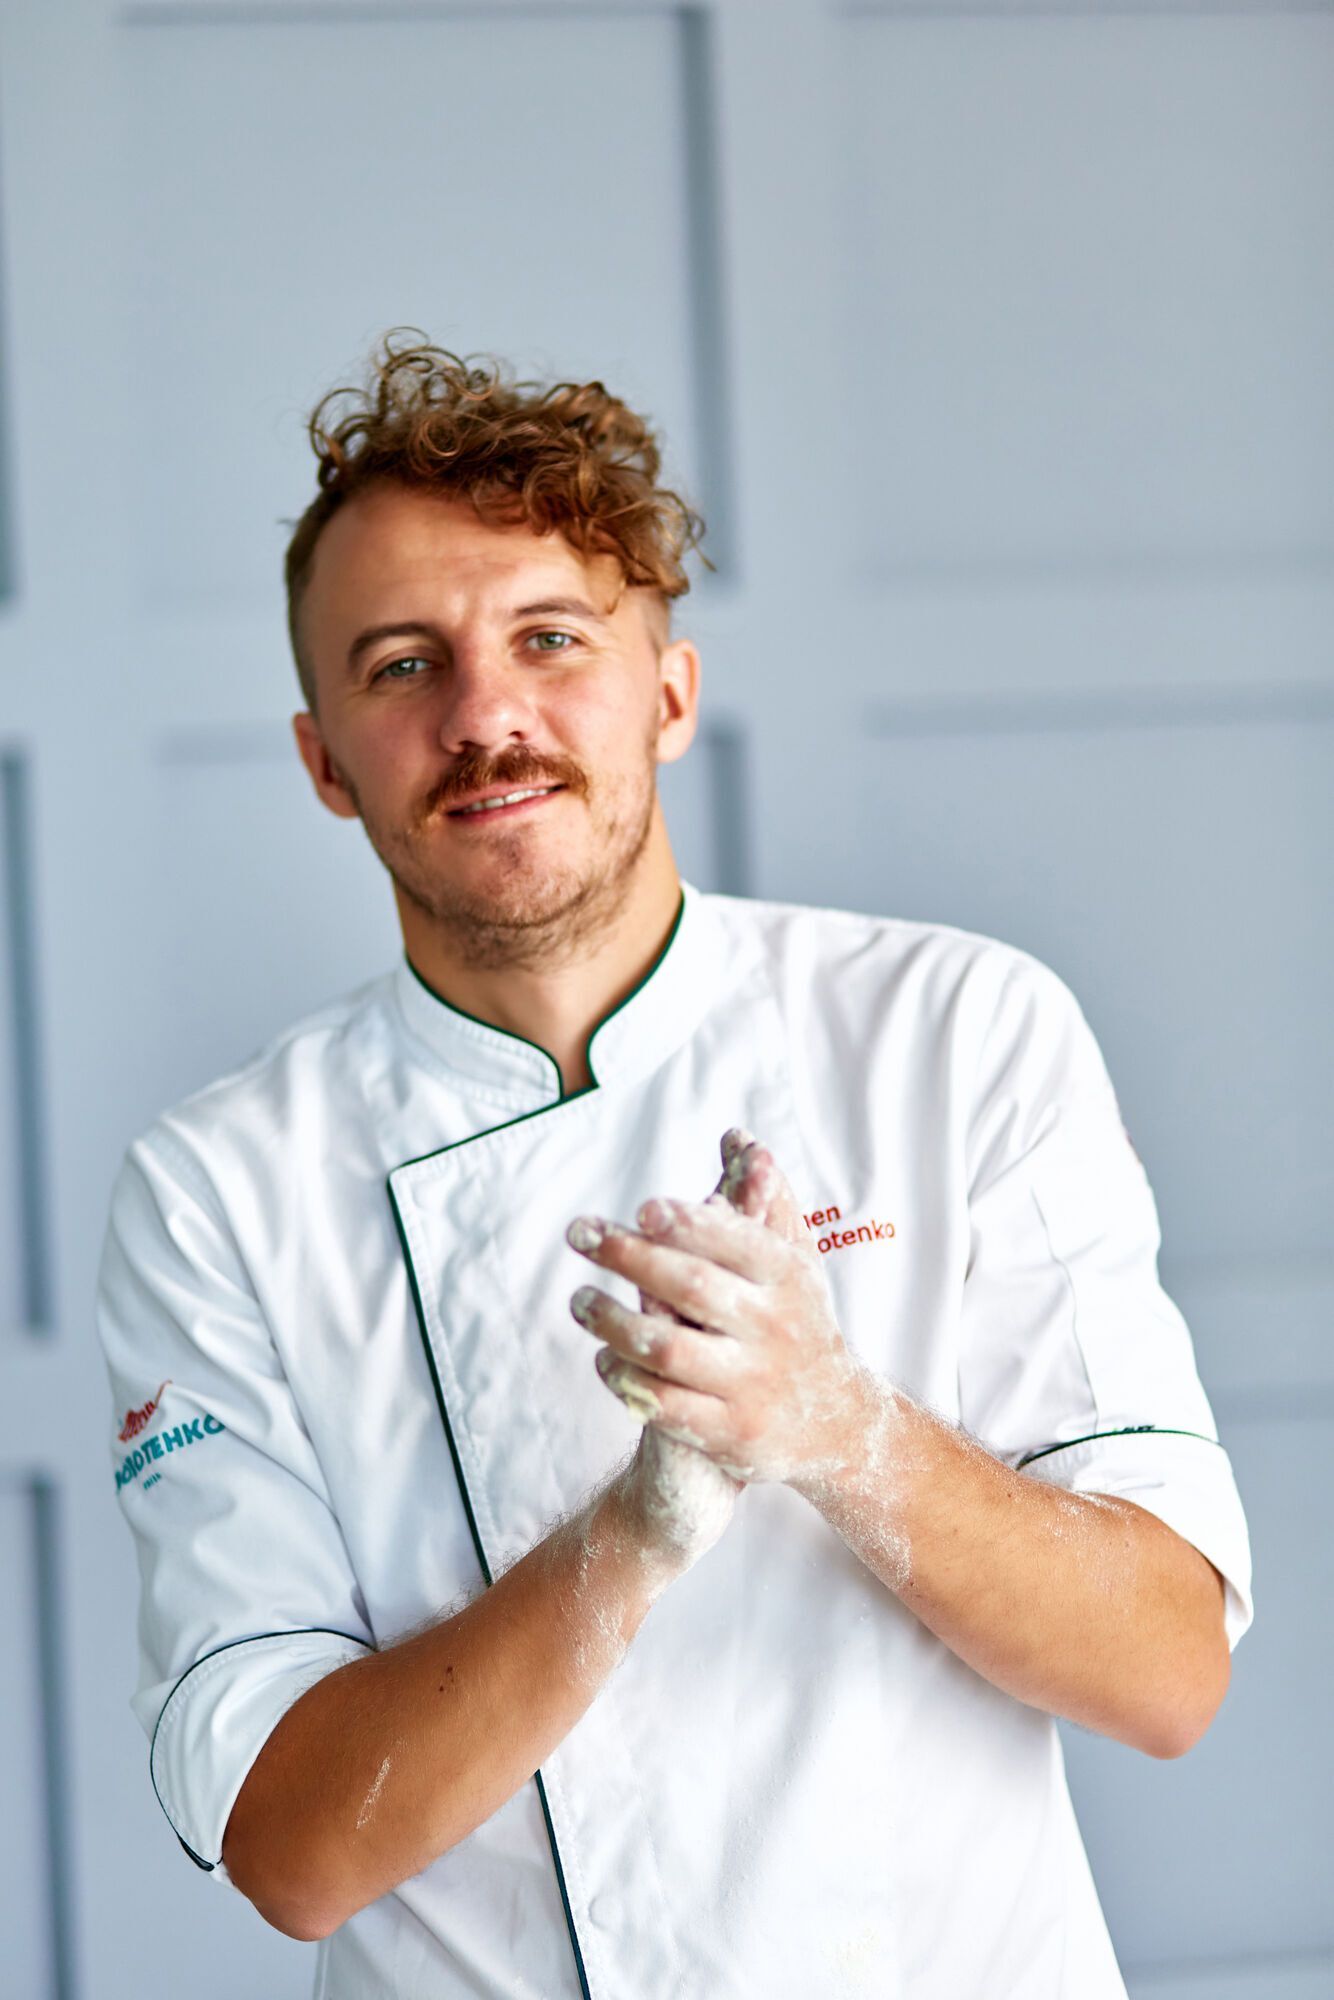 Євген Клопотенко готує на кухні